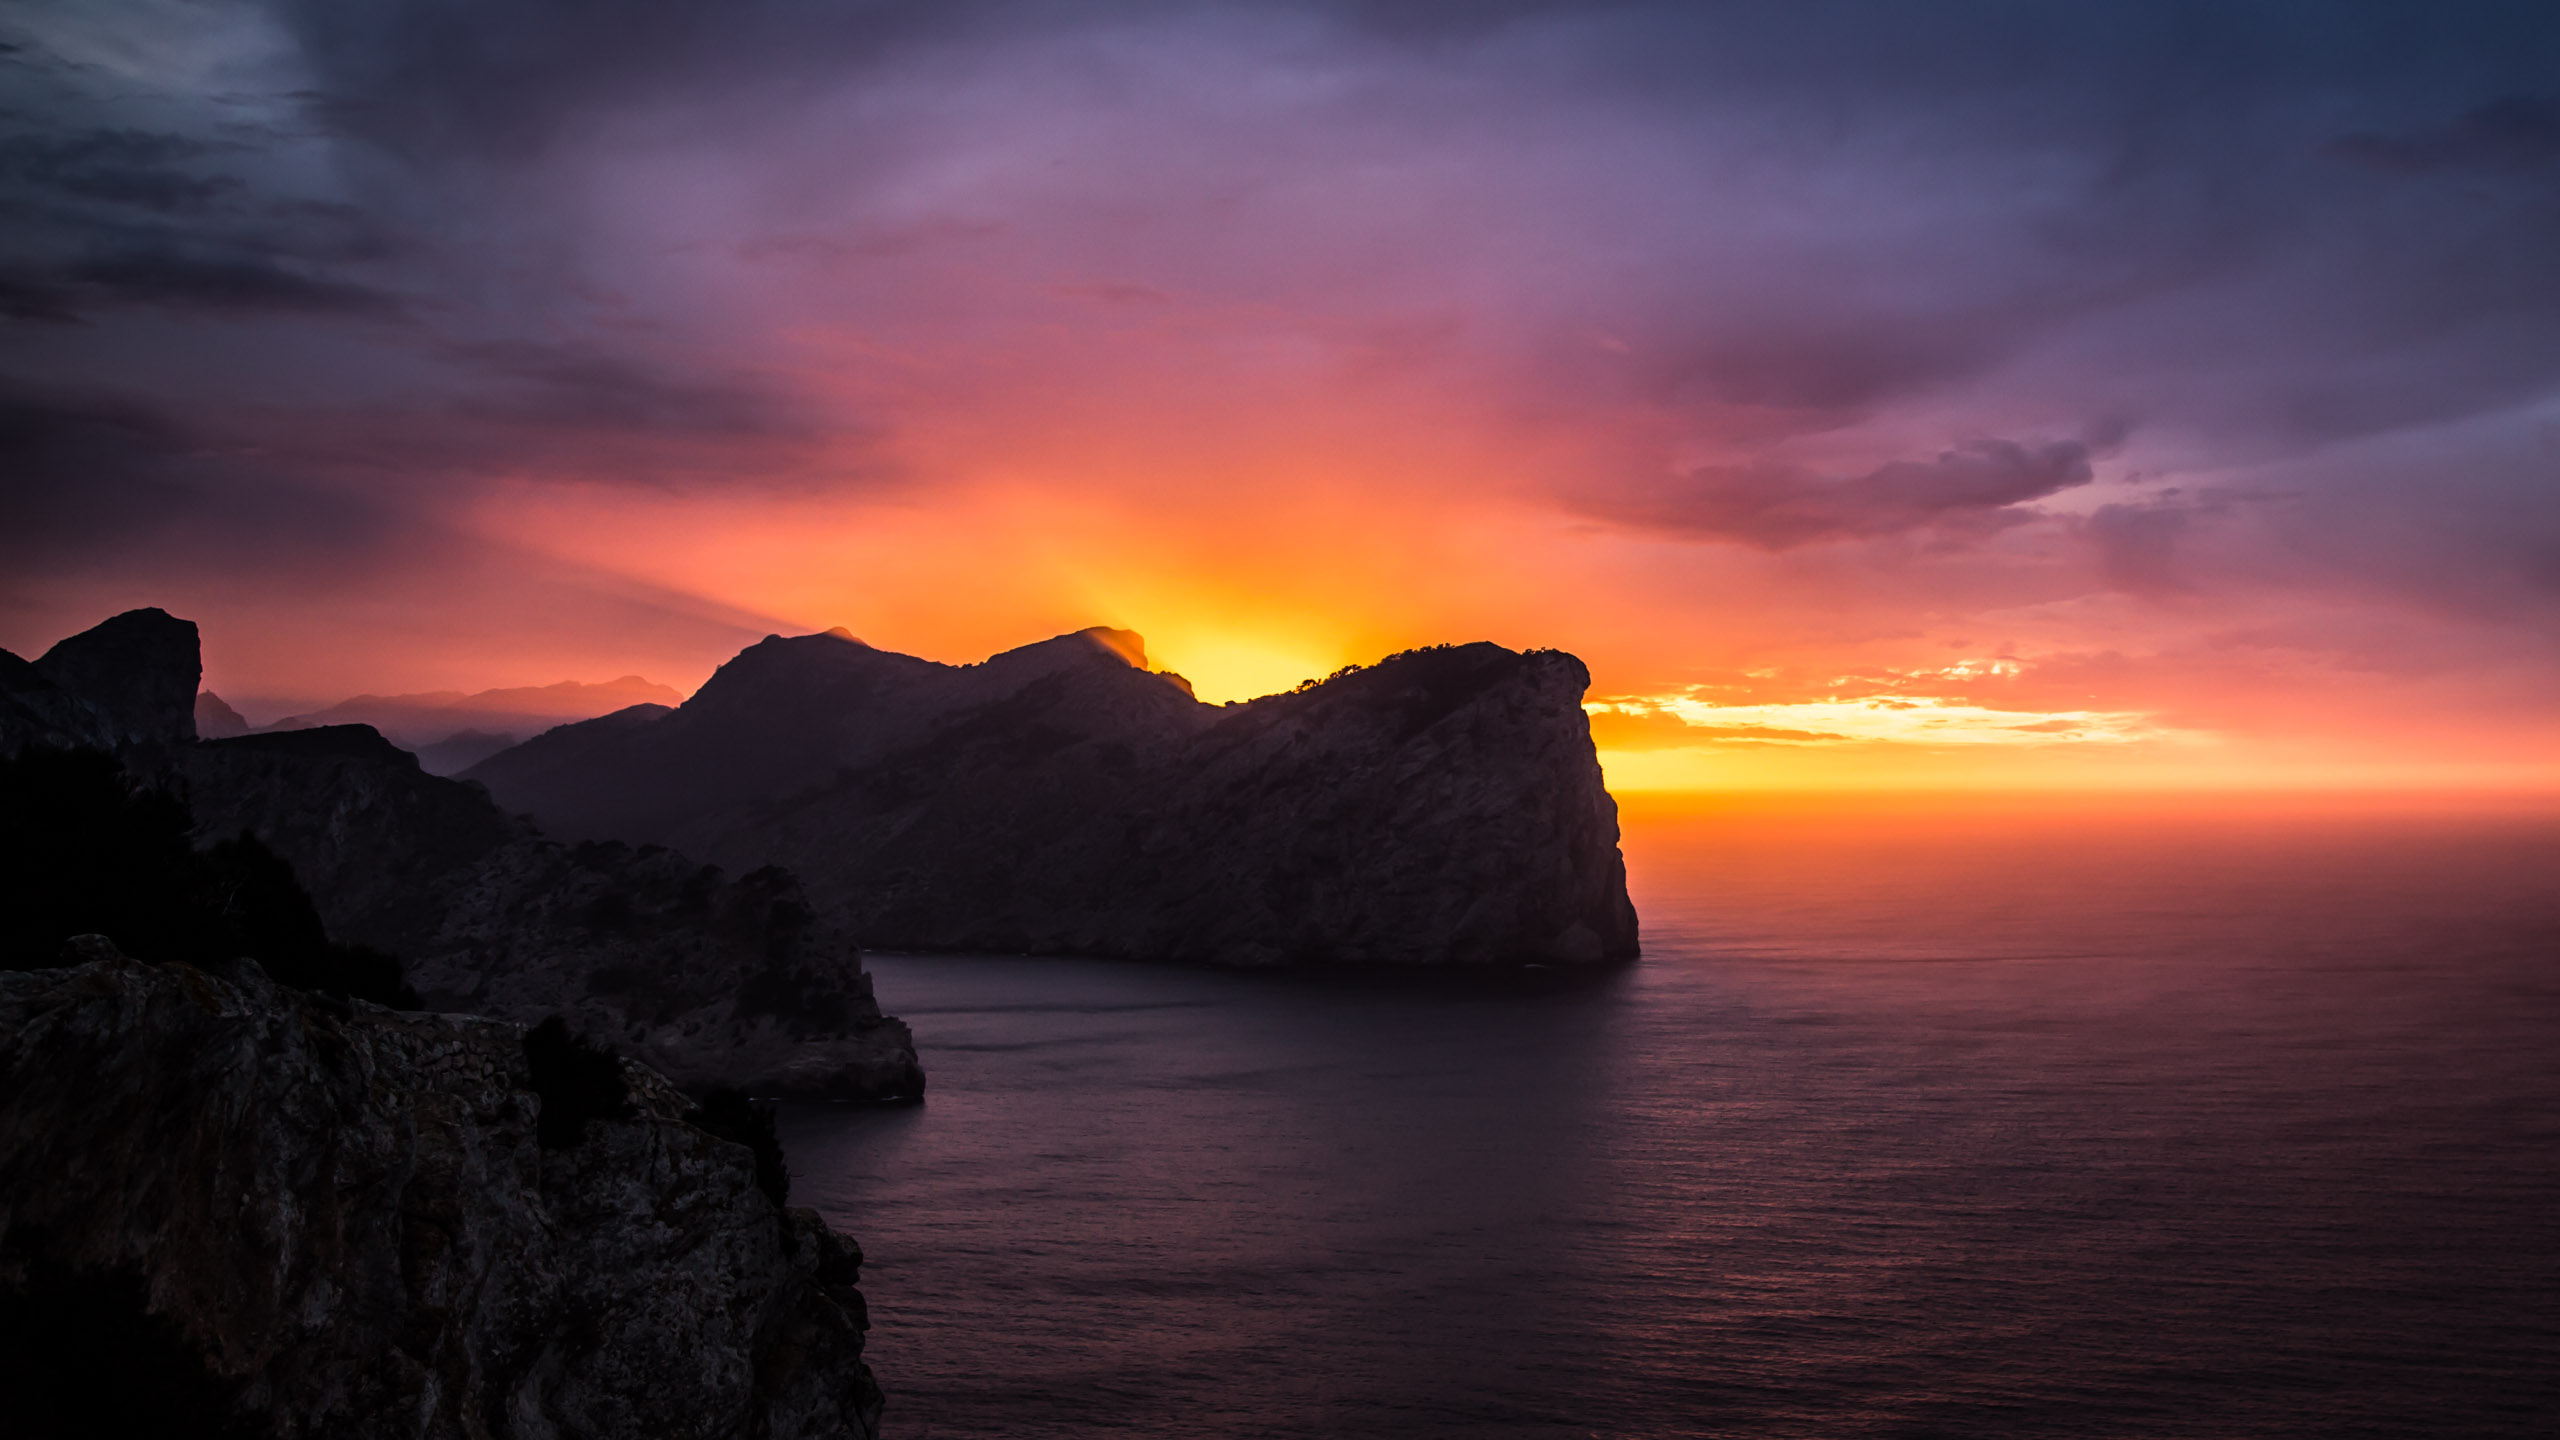 Sky Flare-Up - Cap de Formentor, Mallorca, Spain